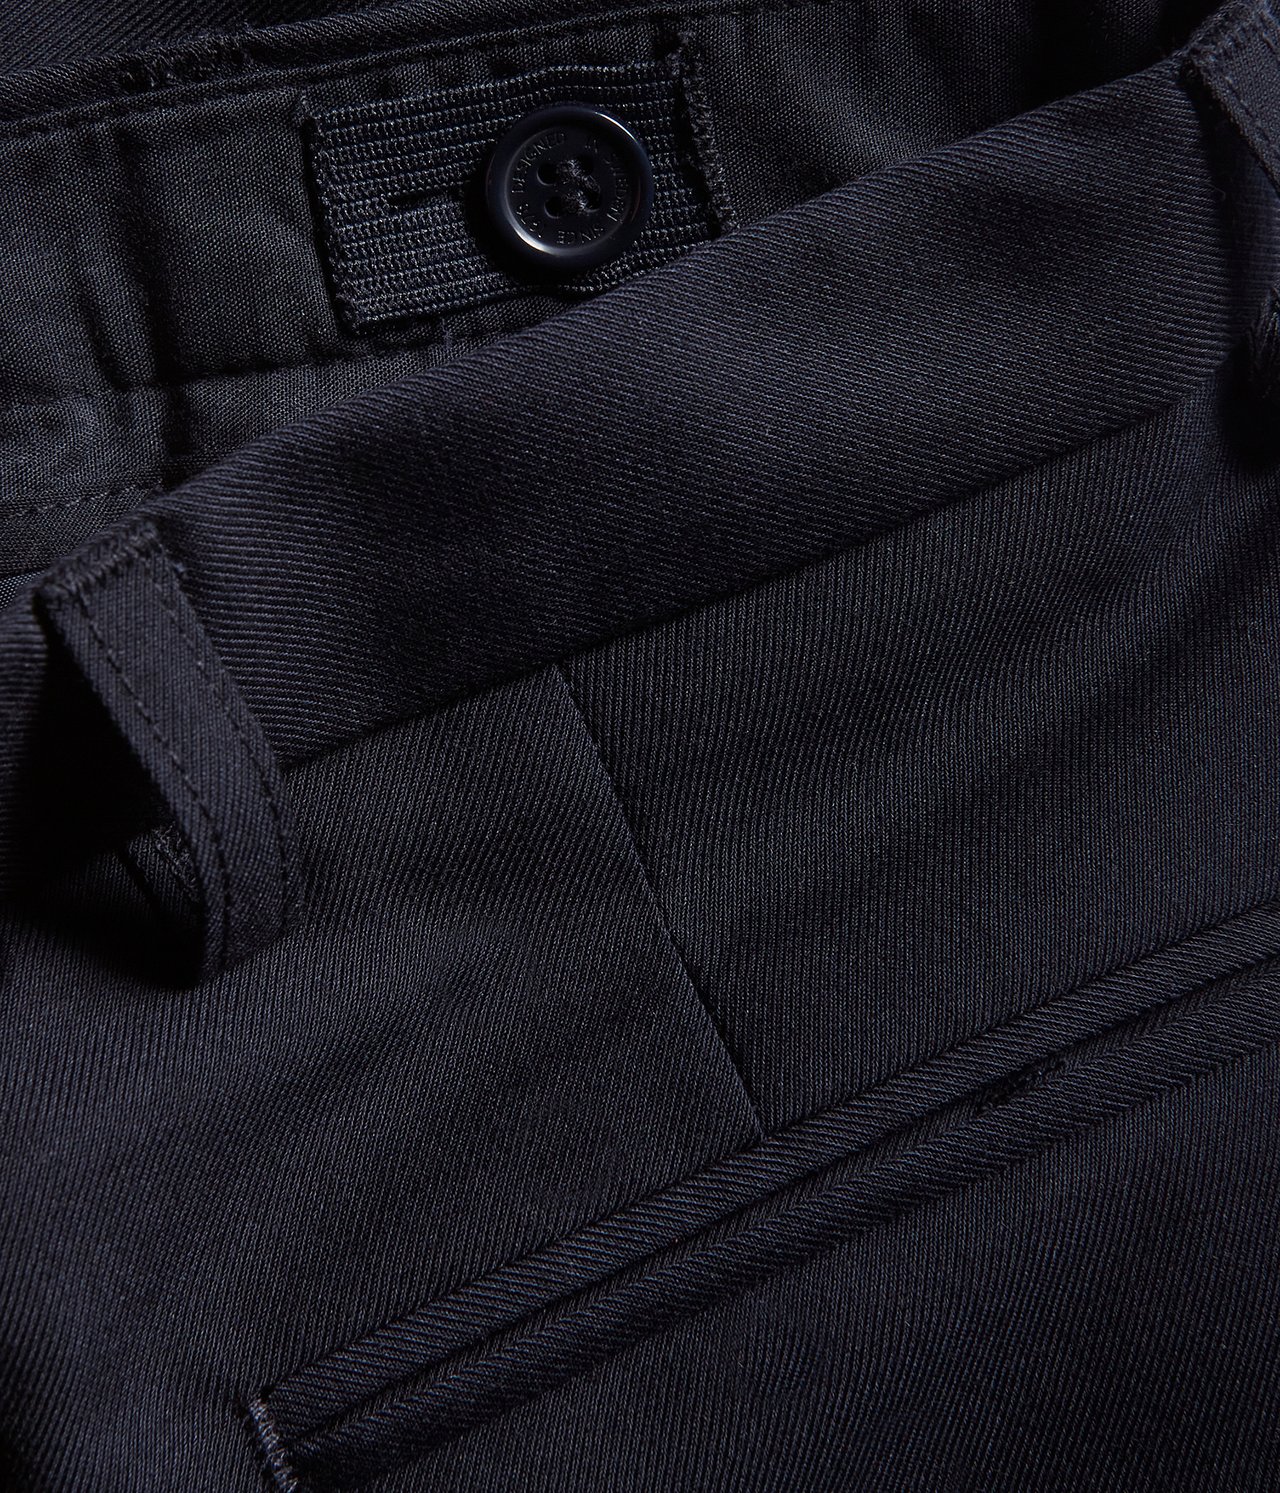 Spodnie od garnituru - Ciemnoniebieski - 6